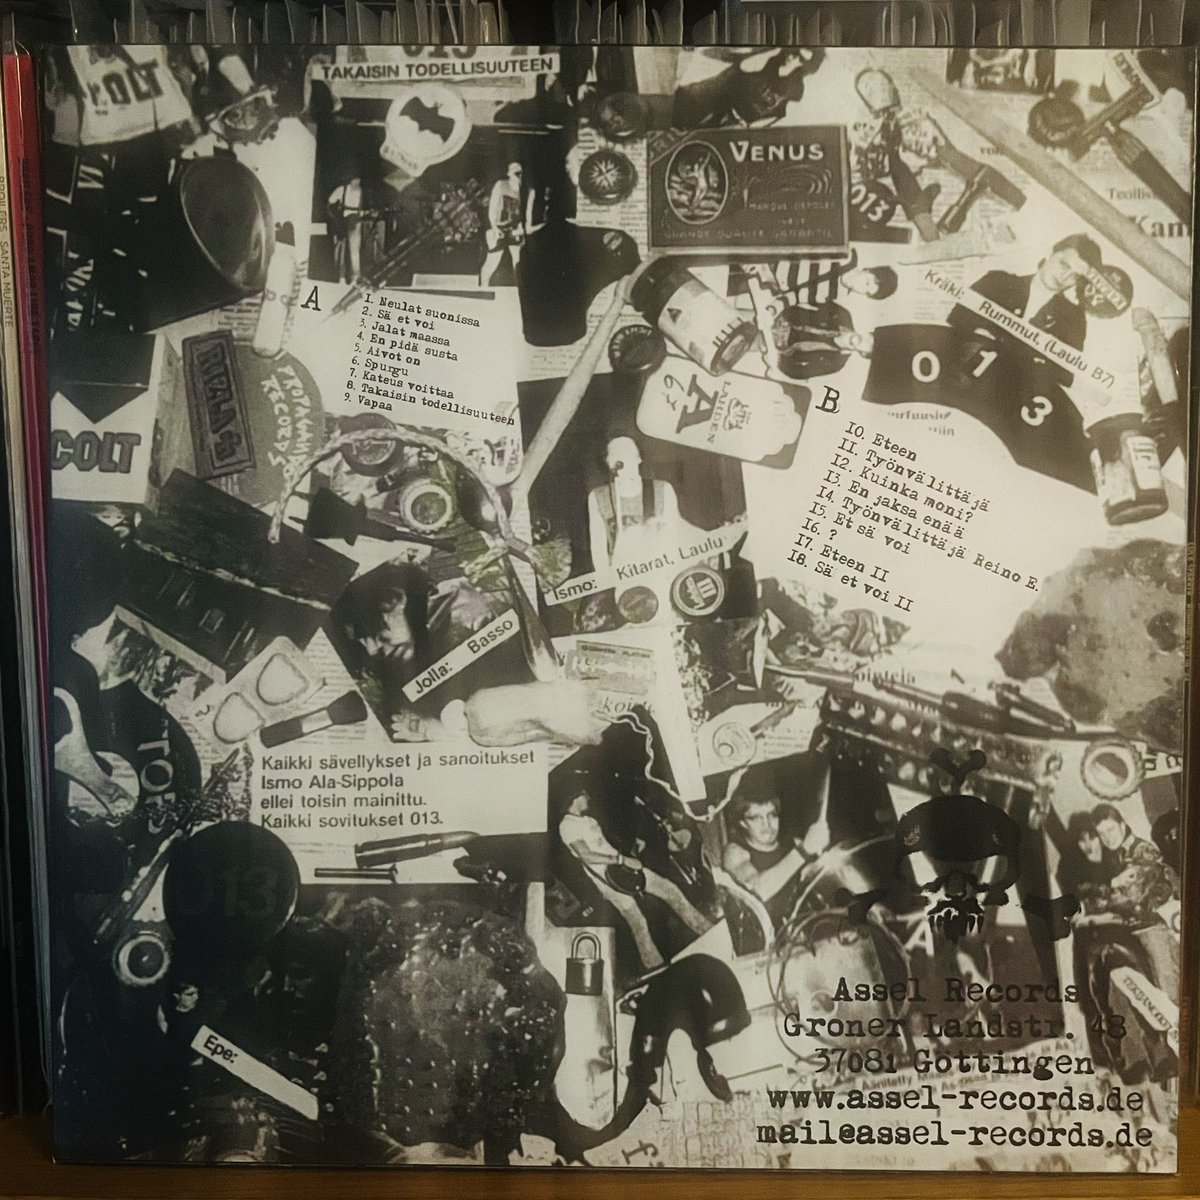 013 - Takaisin Todellisuuteen Lp Assel Records Repress 2005 on black Vinyl Early Punk Band from Pukkila, Finland. Founded in 1979. Original releases from Propaganda 1983. Killed by Death Punkrock! #vinylcollection #showyourvinyl #punkrock #punk #finlandpunk